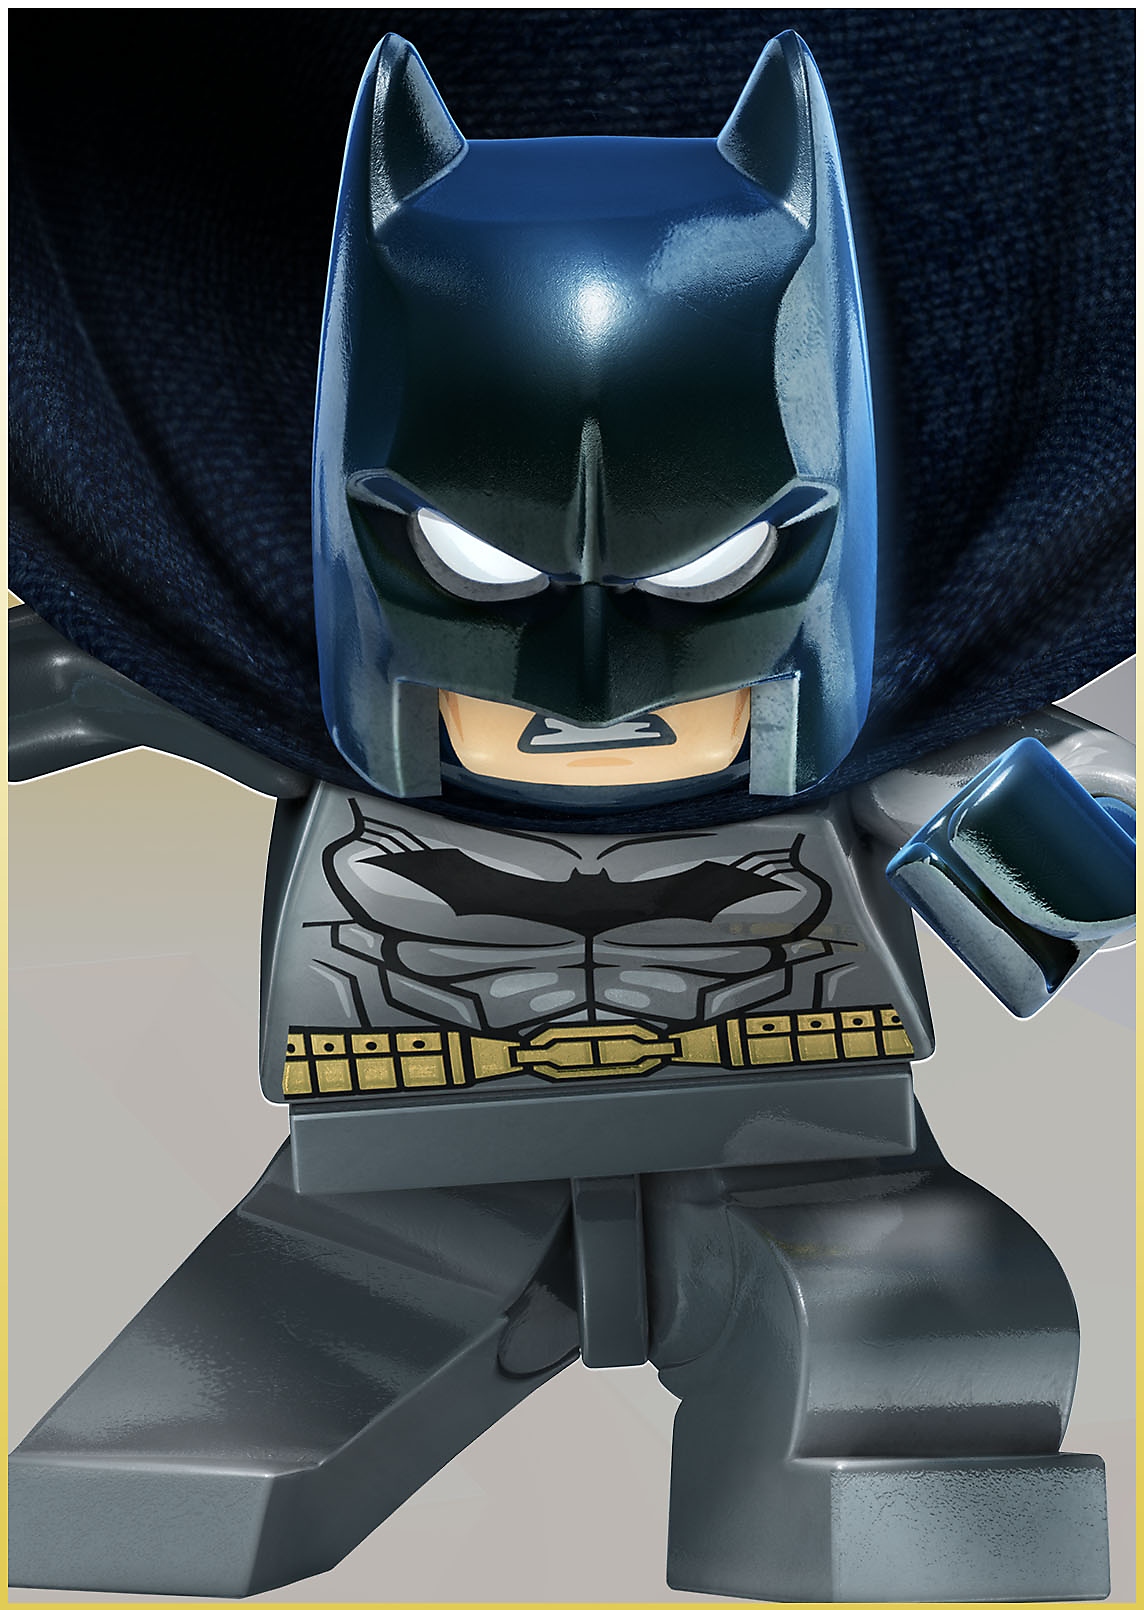 Lego Batman swooping down